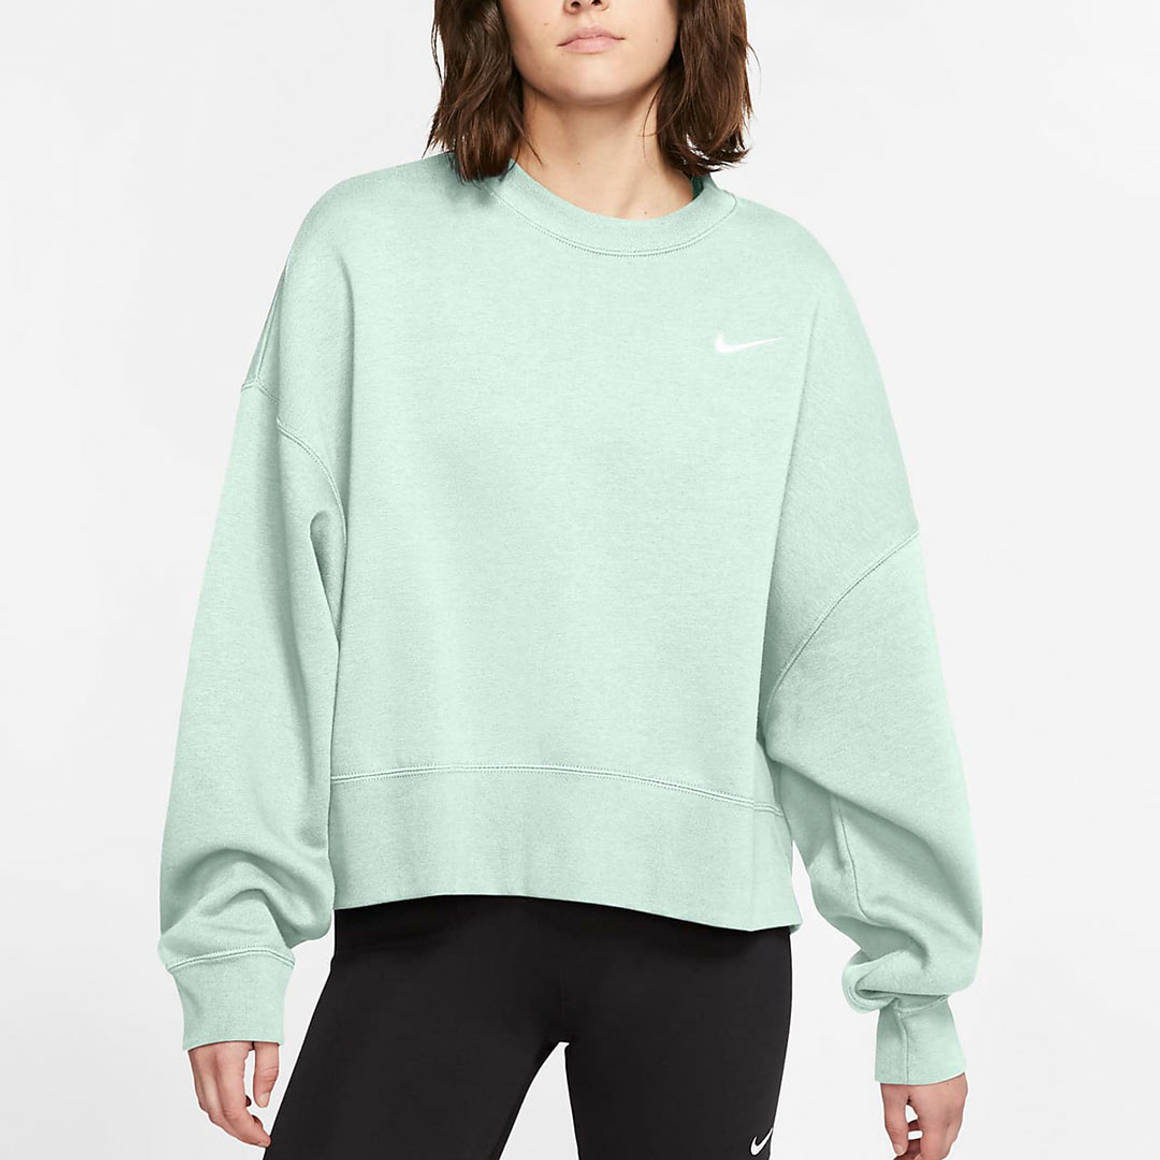 Best Women's Sweatshirts to Buy in 2022 | The Sole Supplier